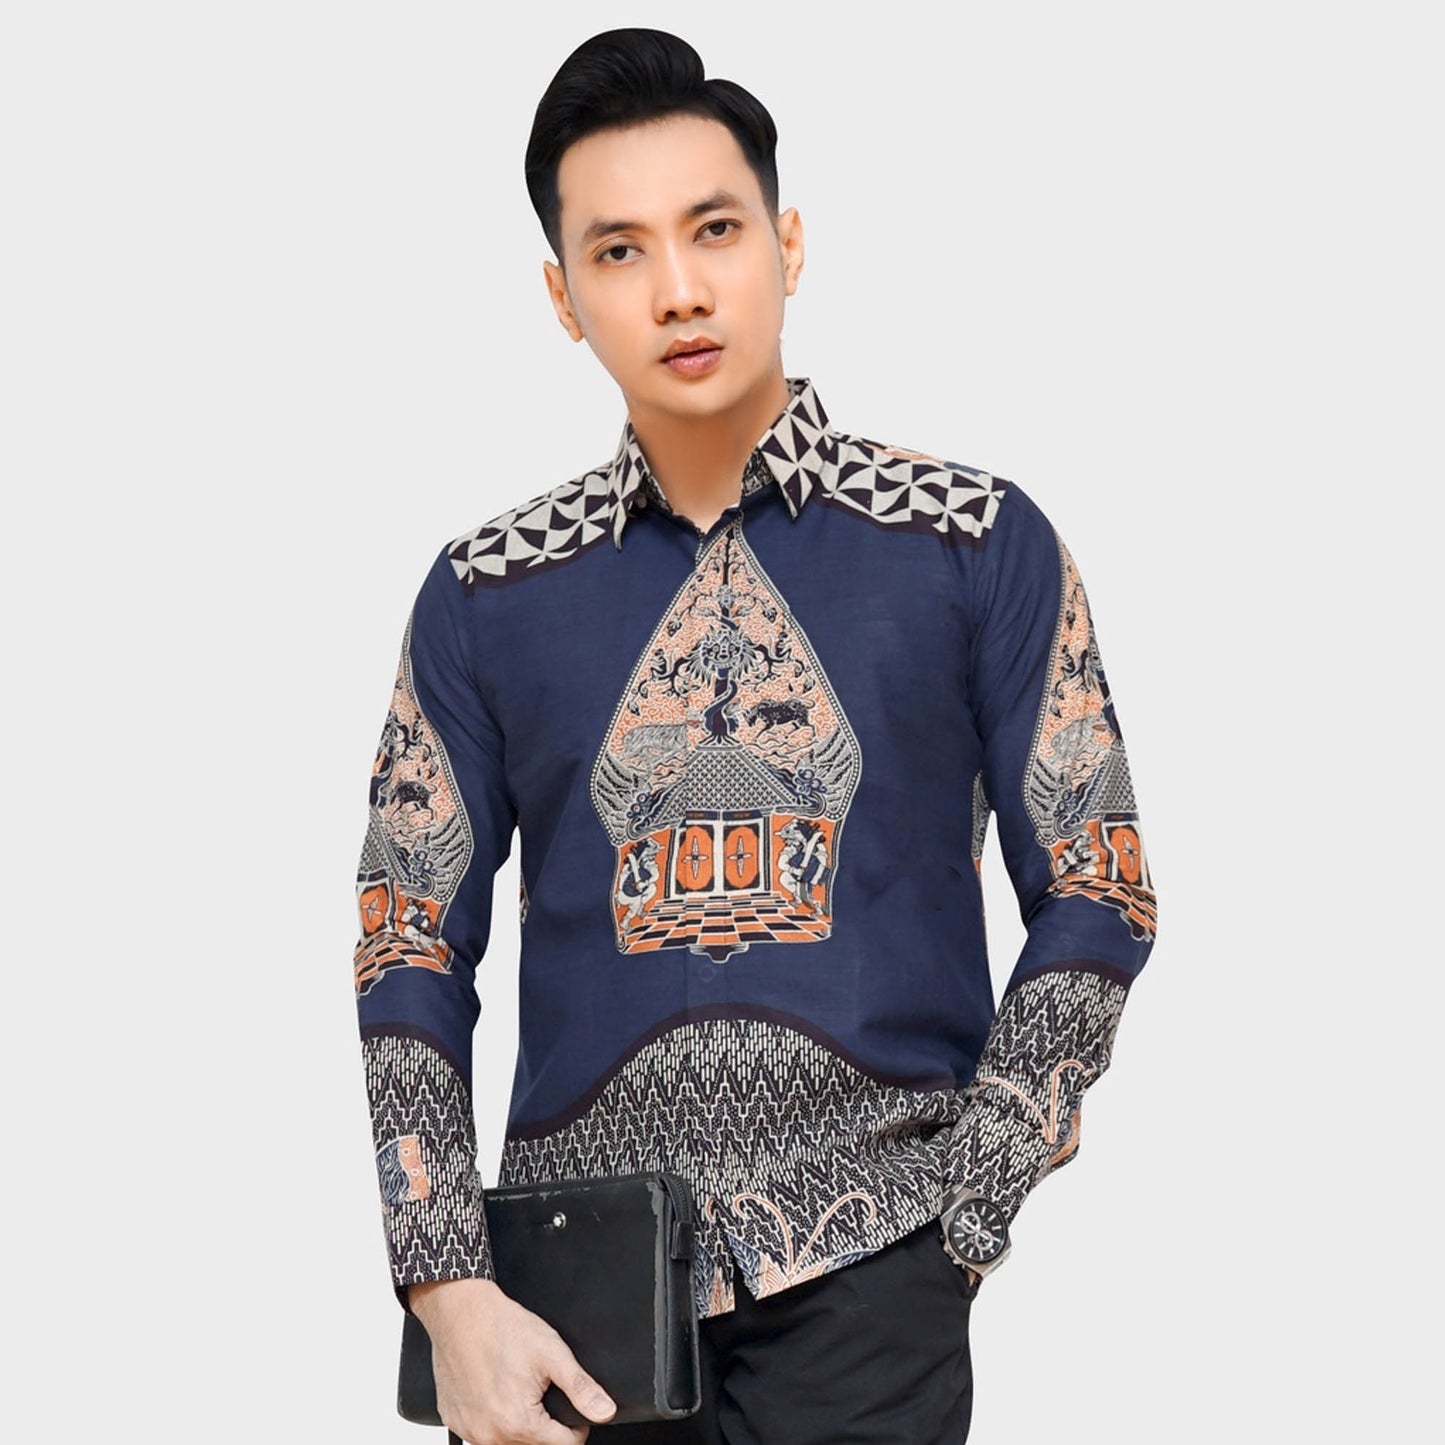 Gunungan Sindoro Navy Batik Motif: Handara Modern Men's Shirt, Stylish Men, Men Batik, Batik Shirt, Formal Shirt For Men